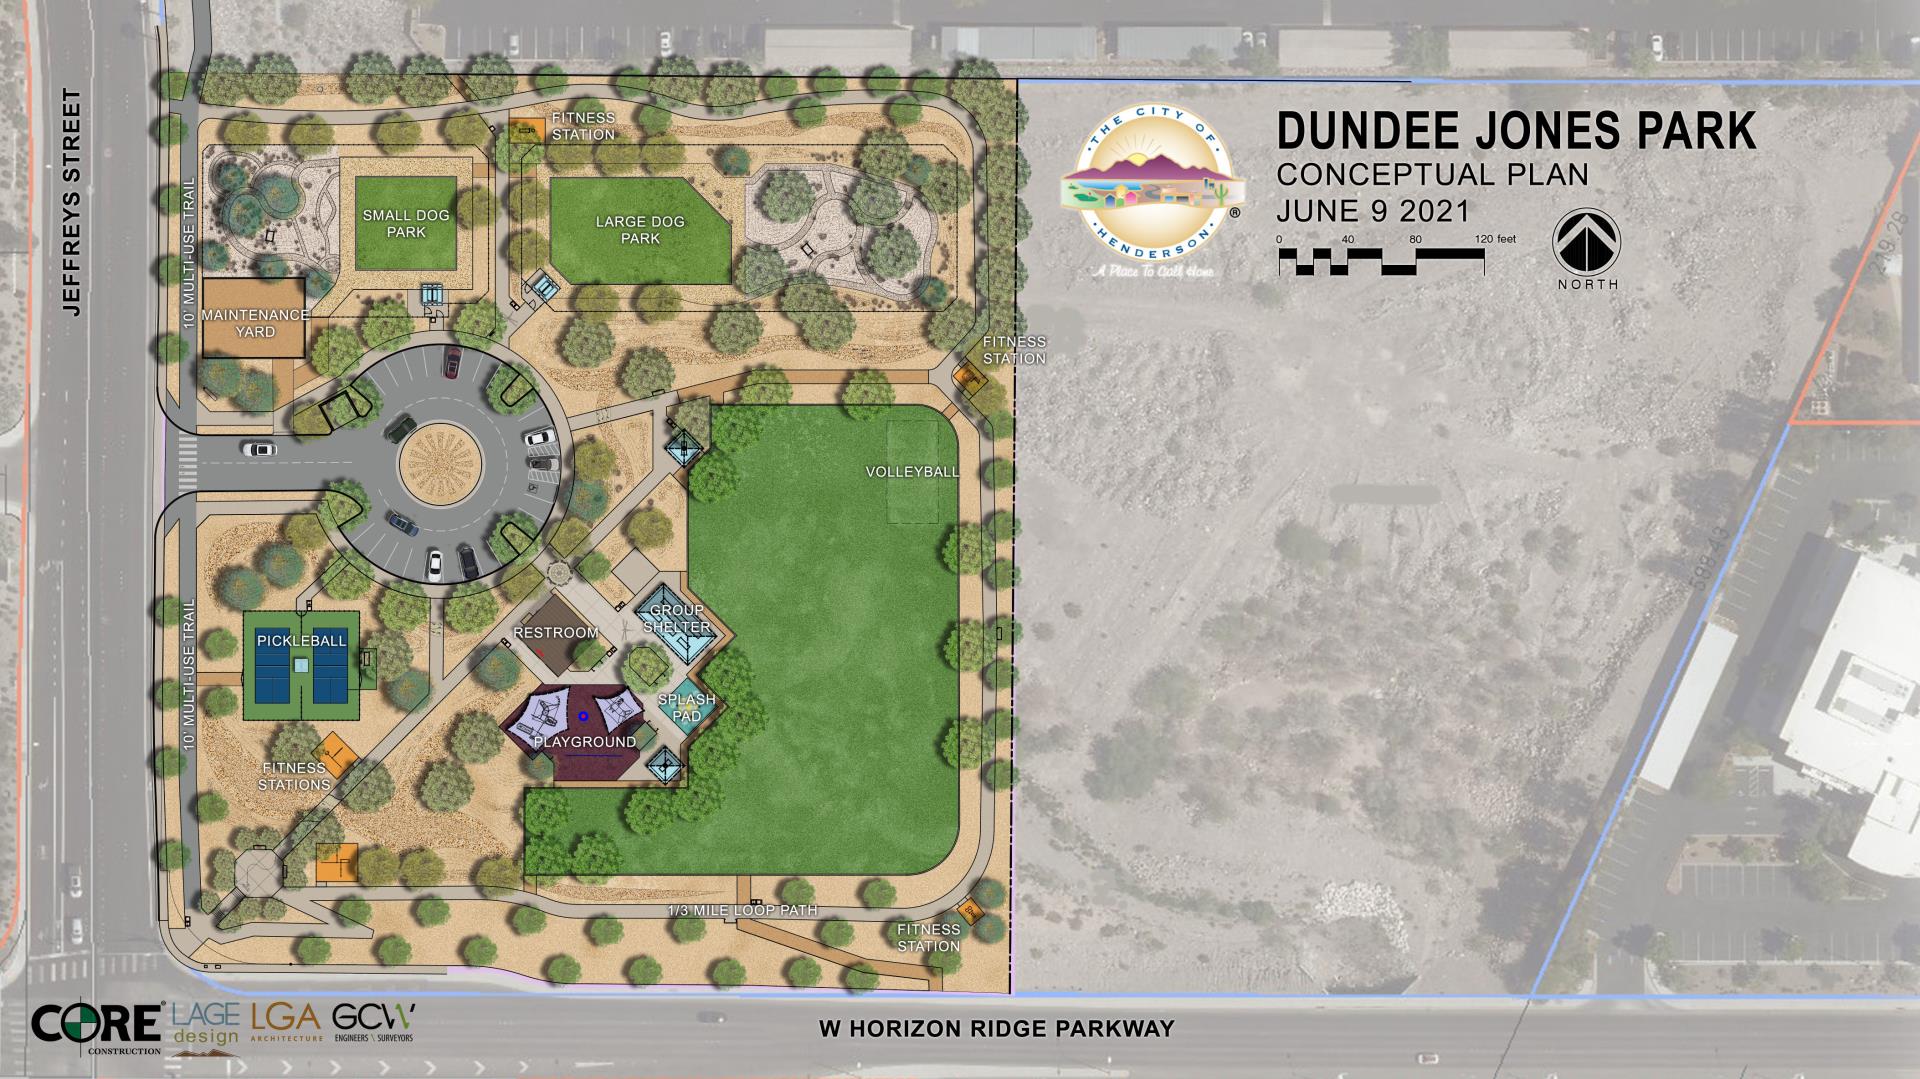 Dundee Jones park site plan